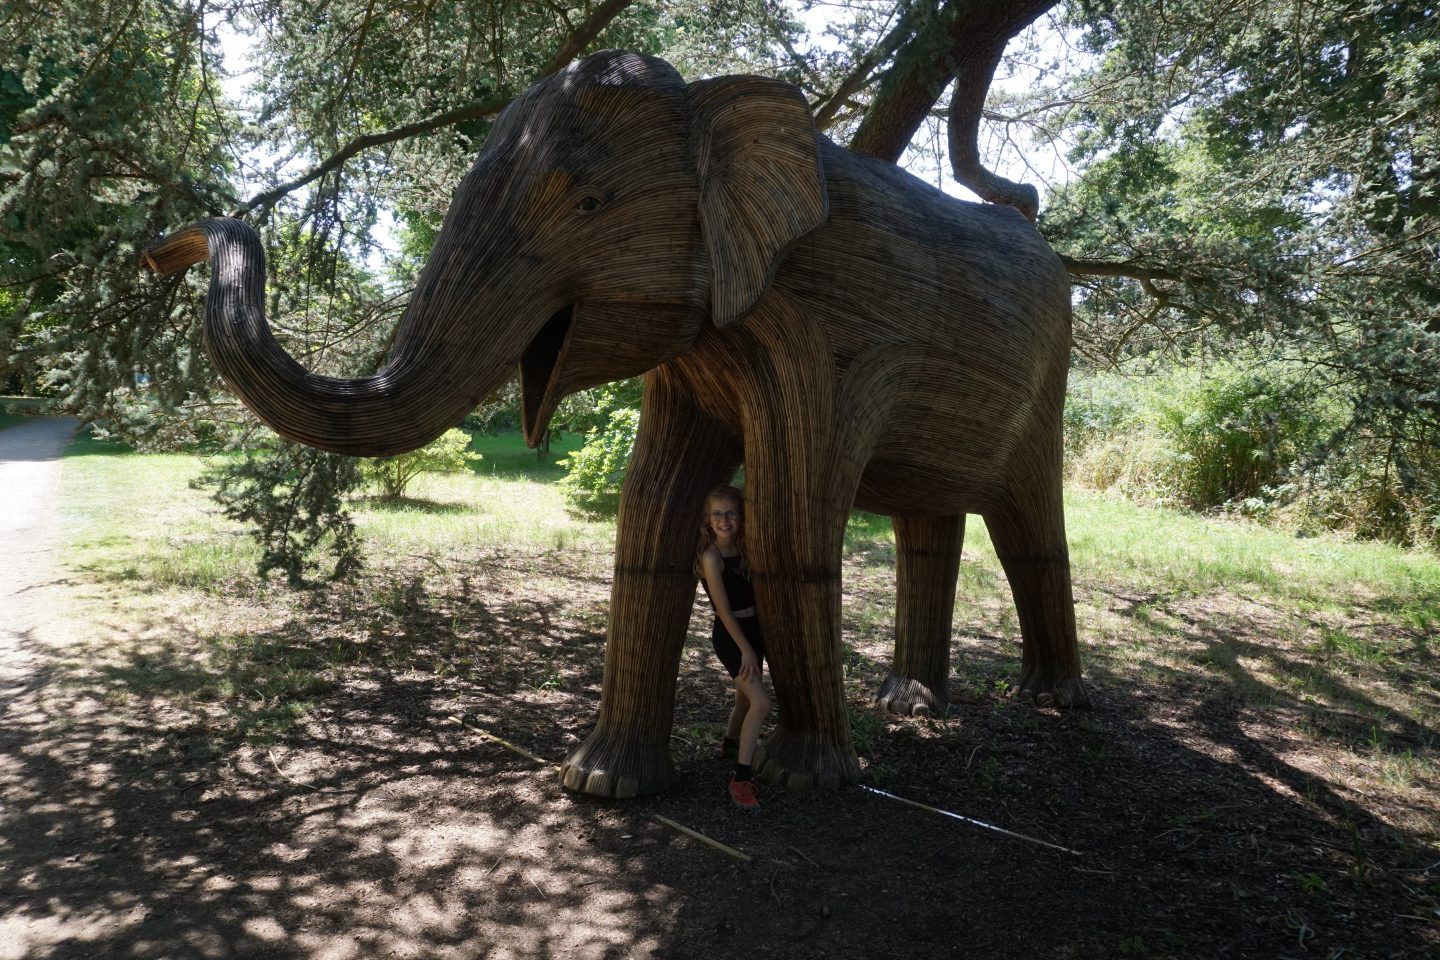 Elephant sculpture beneath a tree at Sudeley Castle